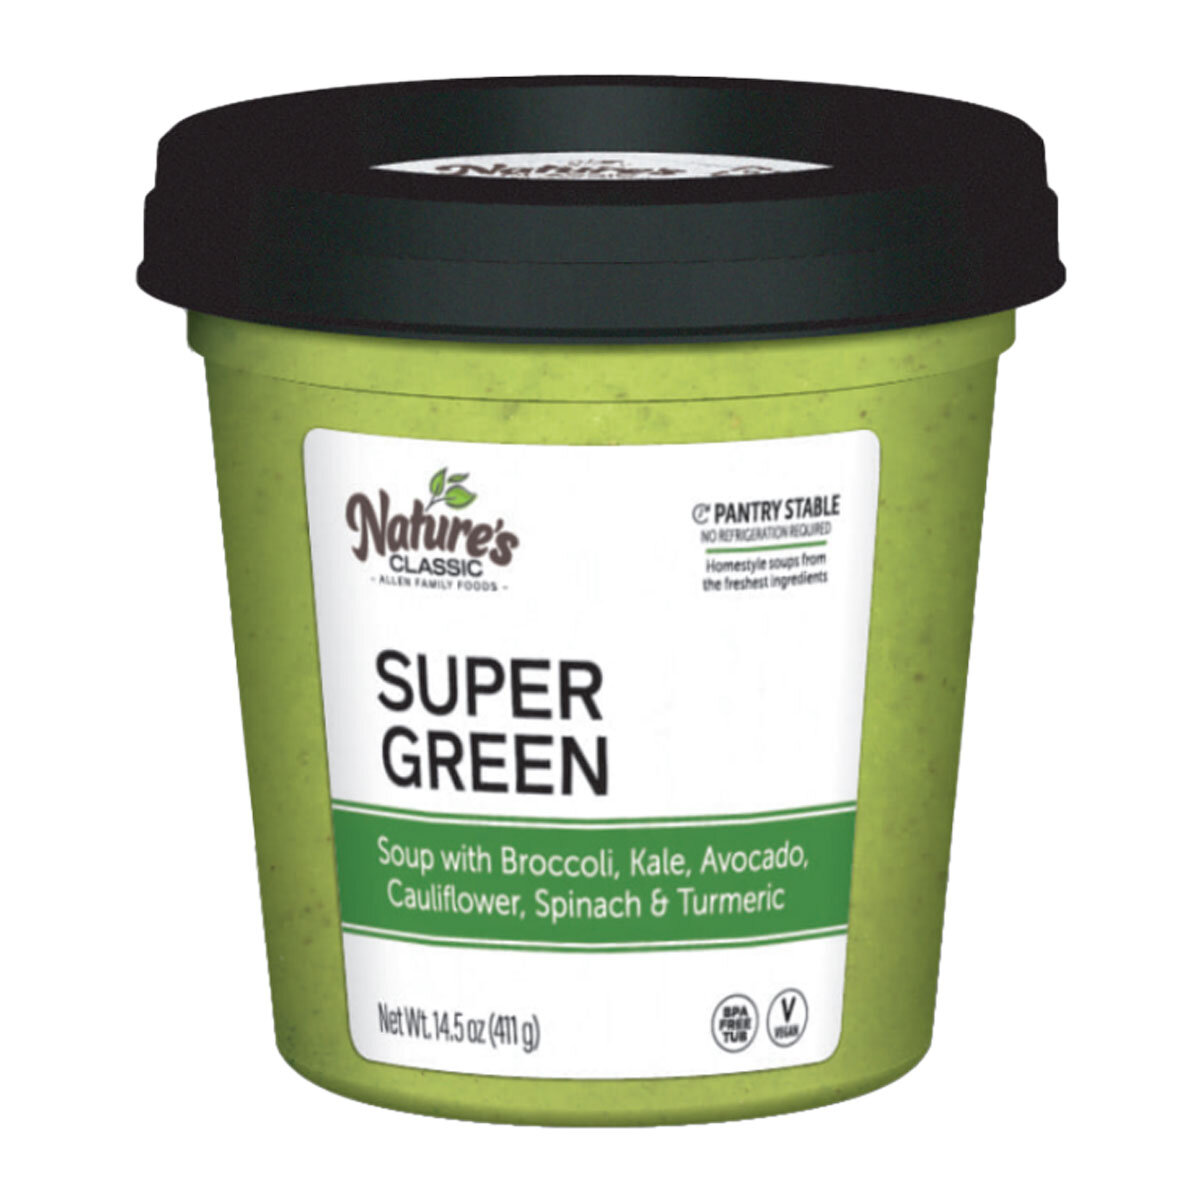 Nature's Classic Super Green Soup, 411g